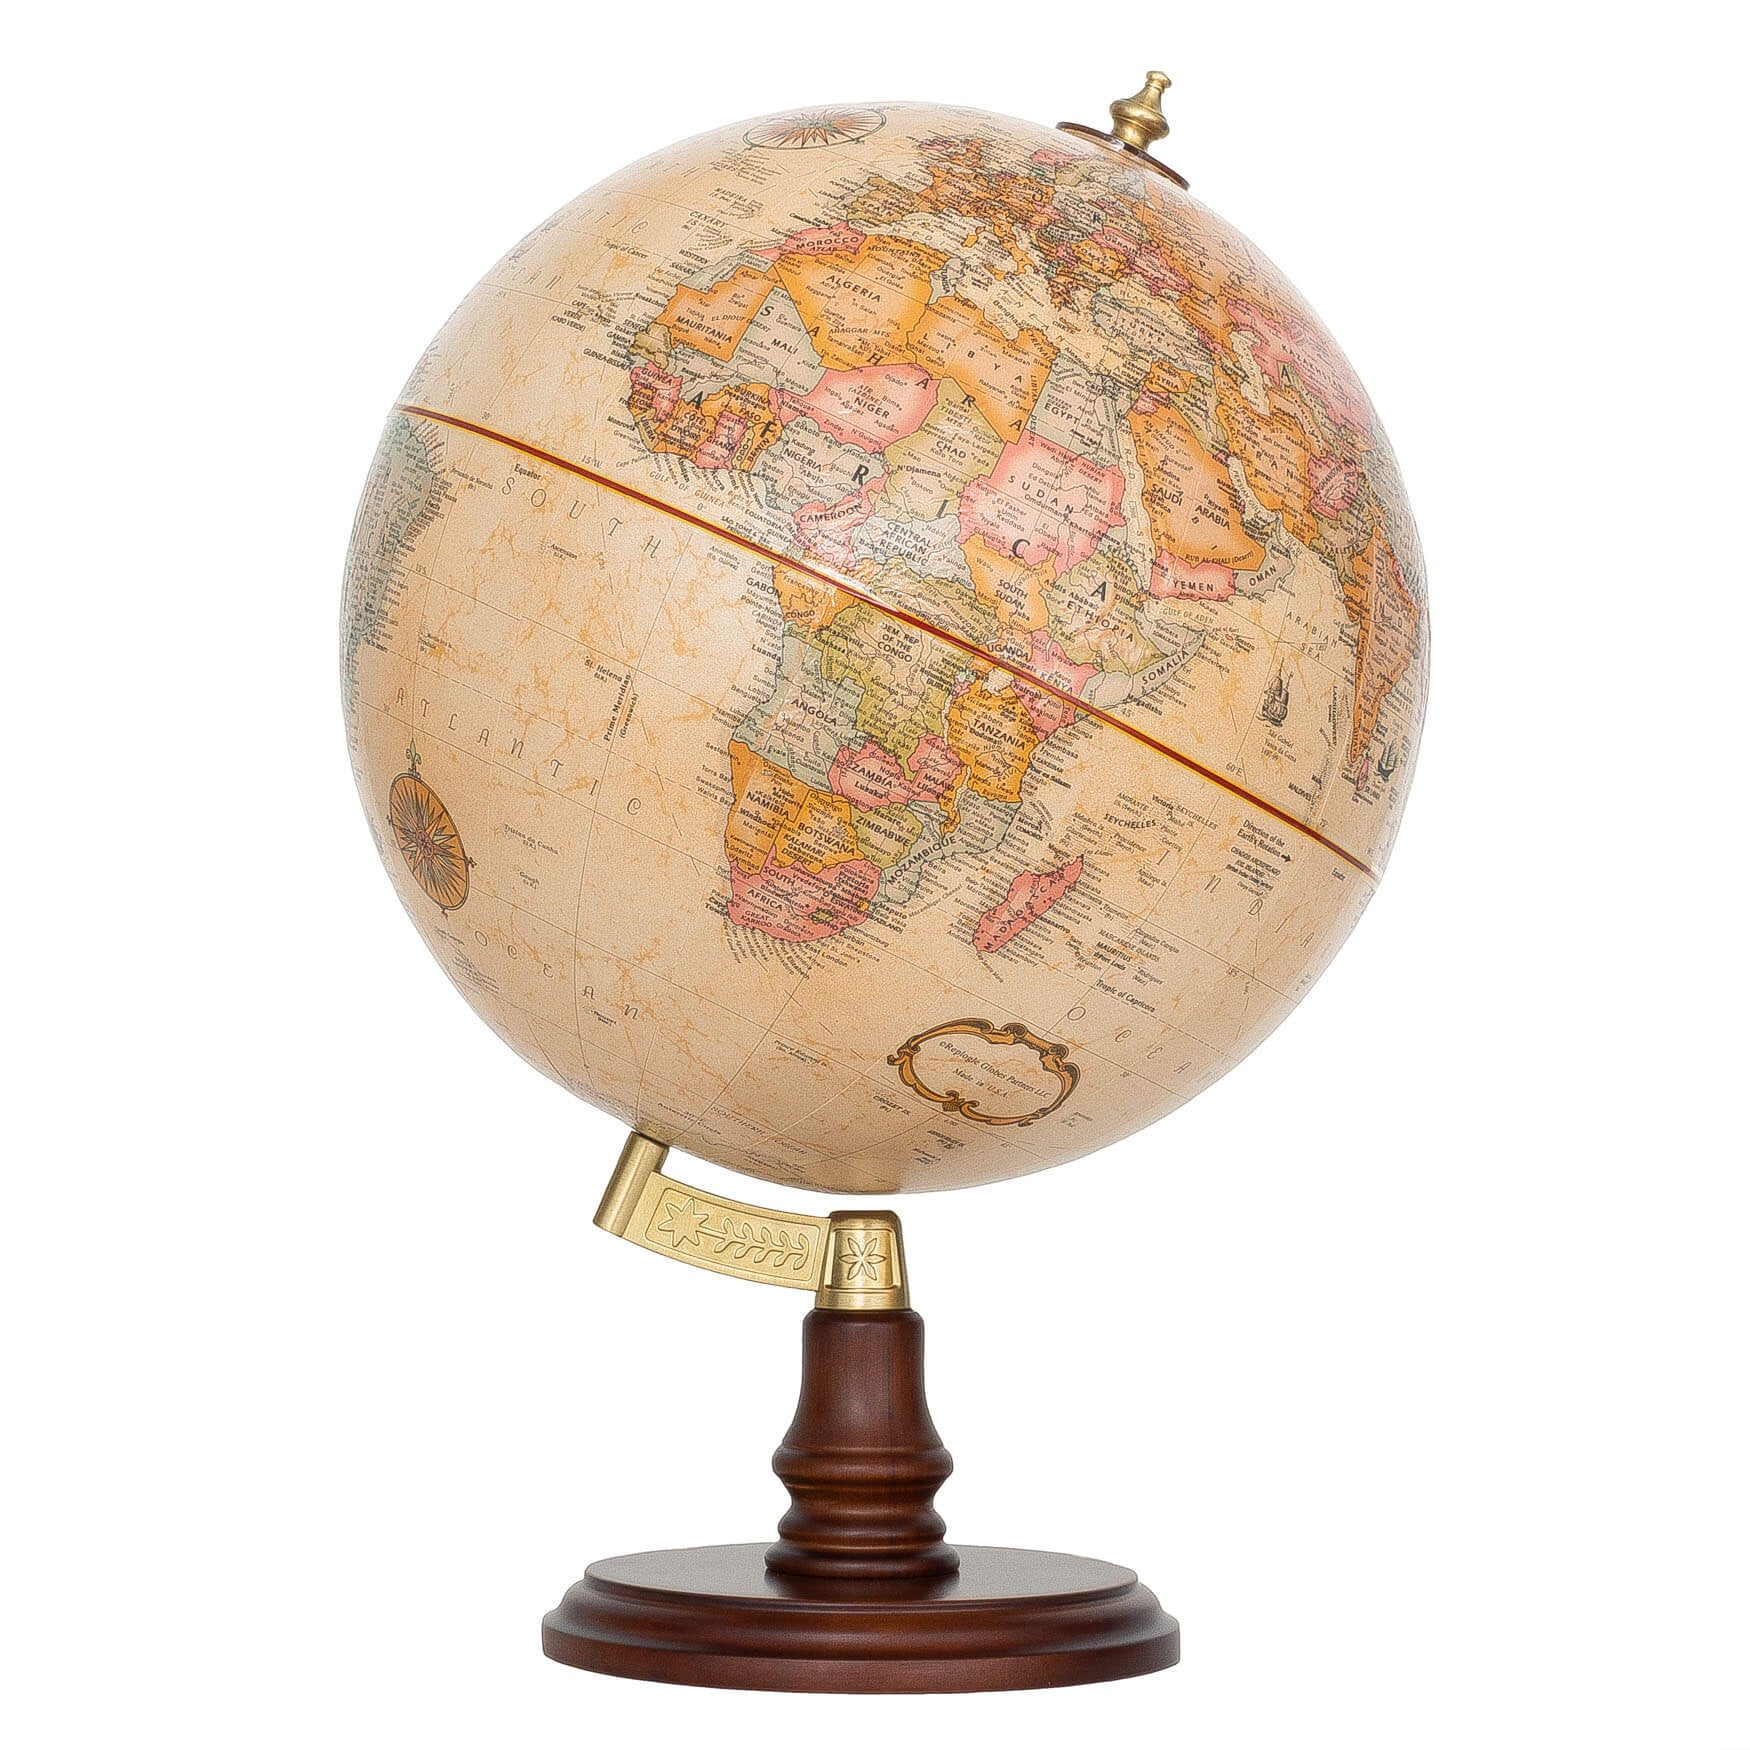 The Cranbrook 30cm Globe by Replogle